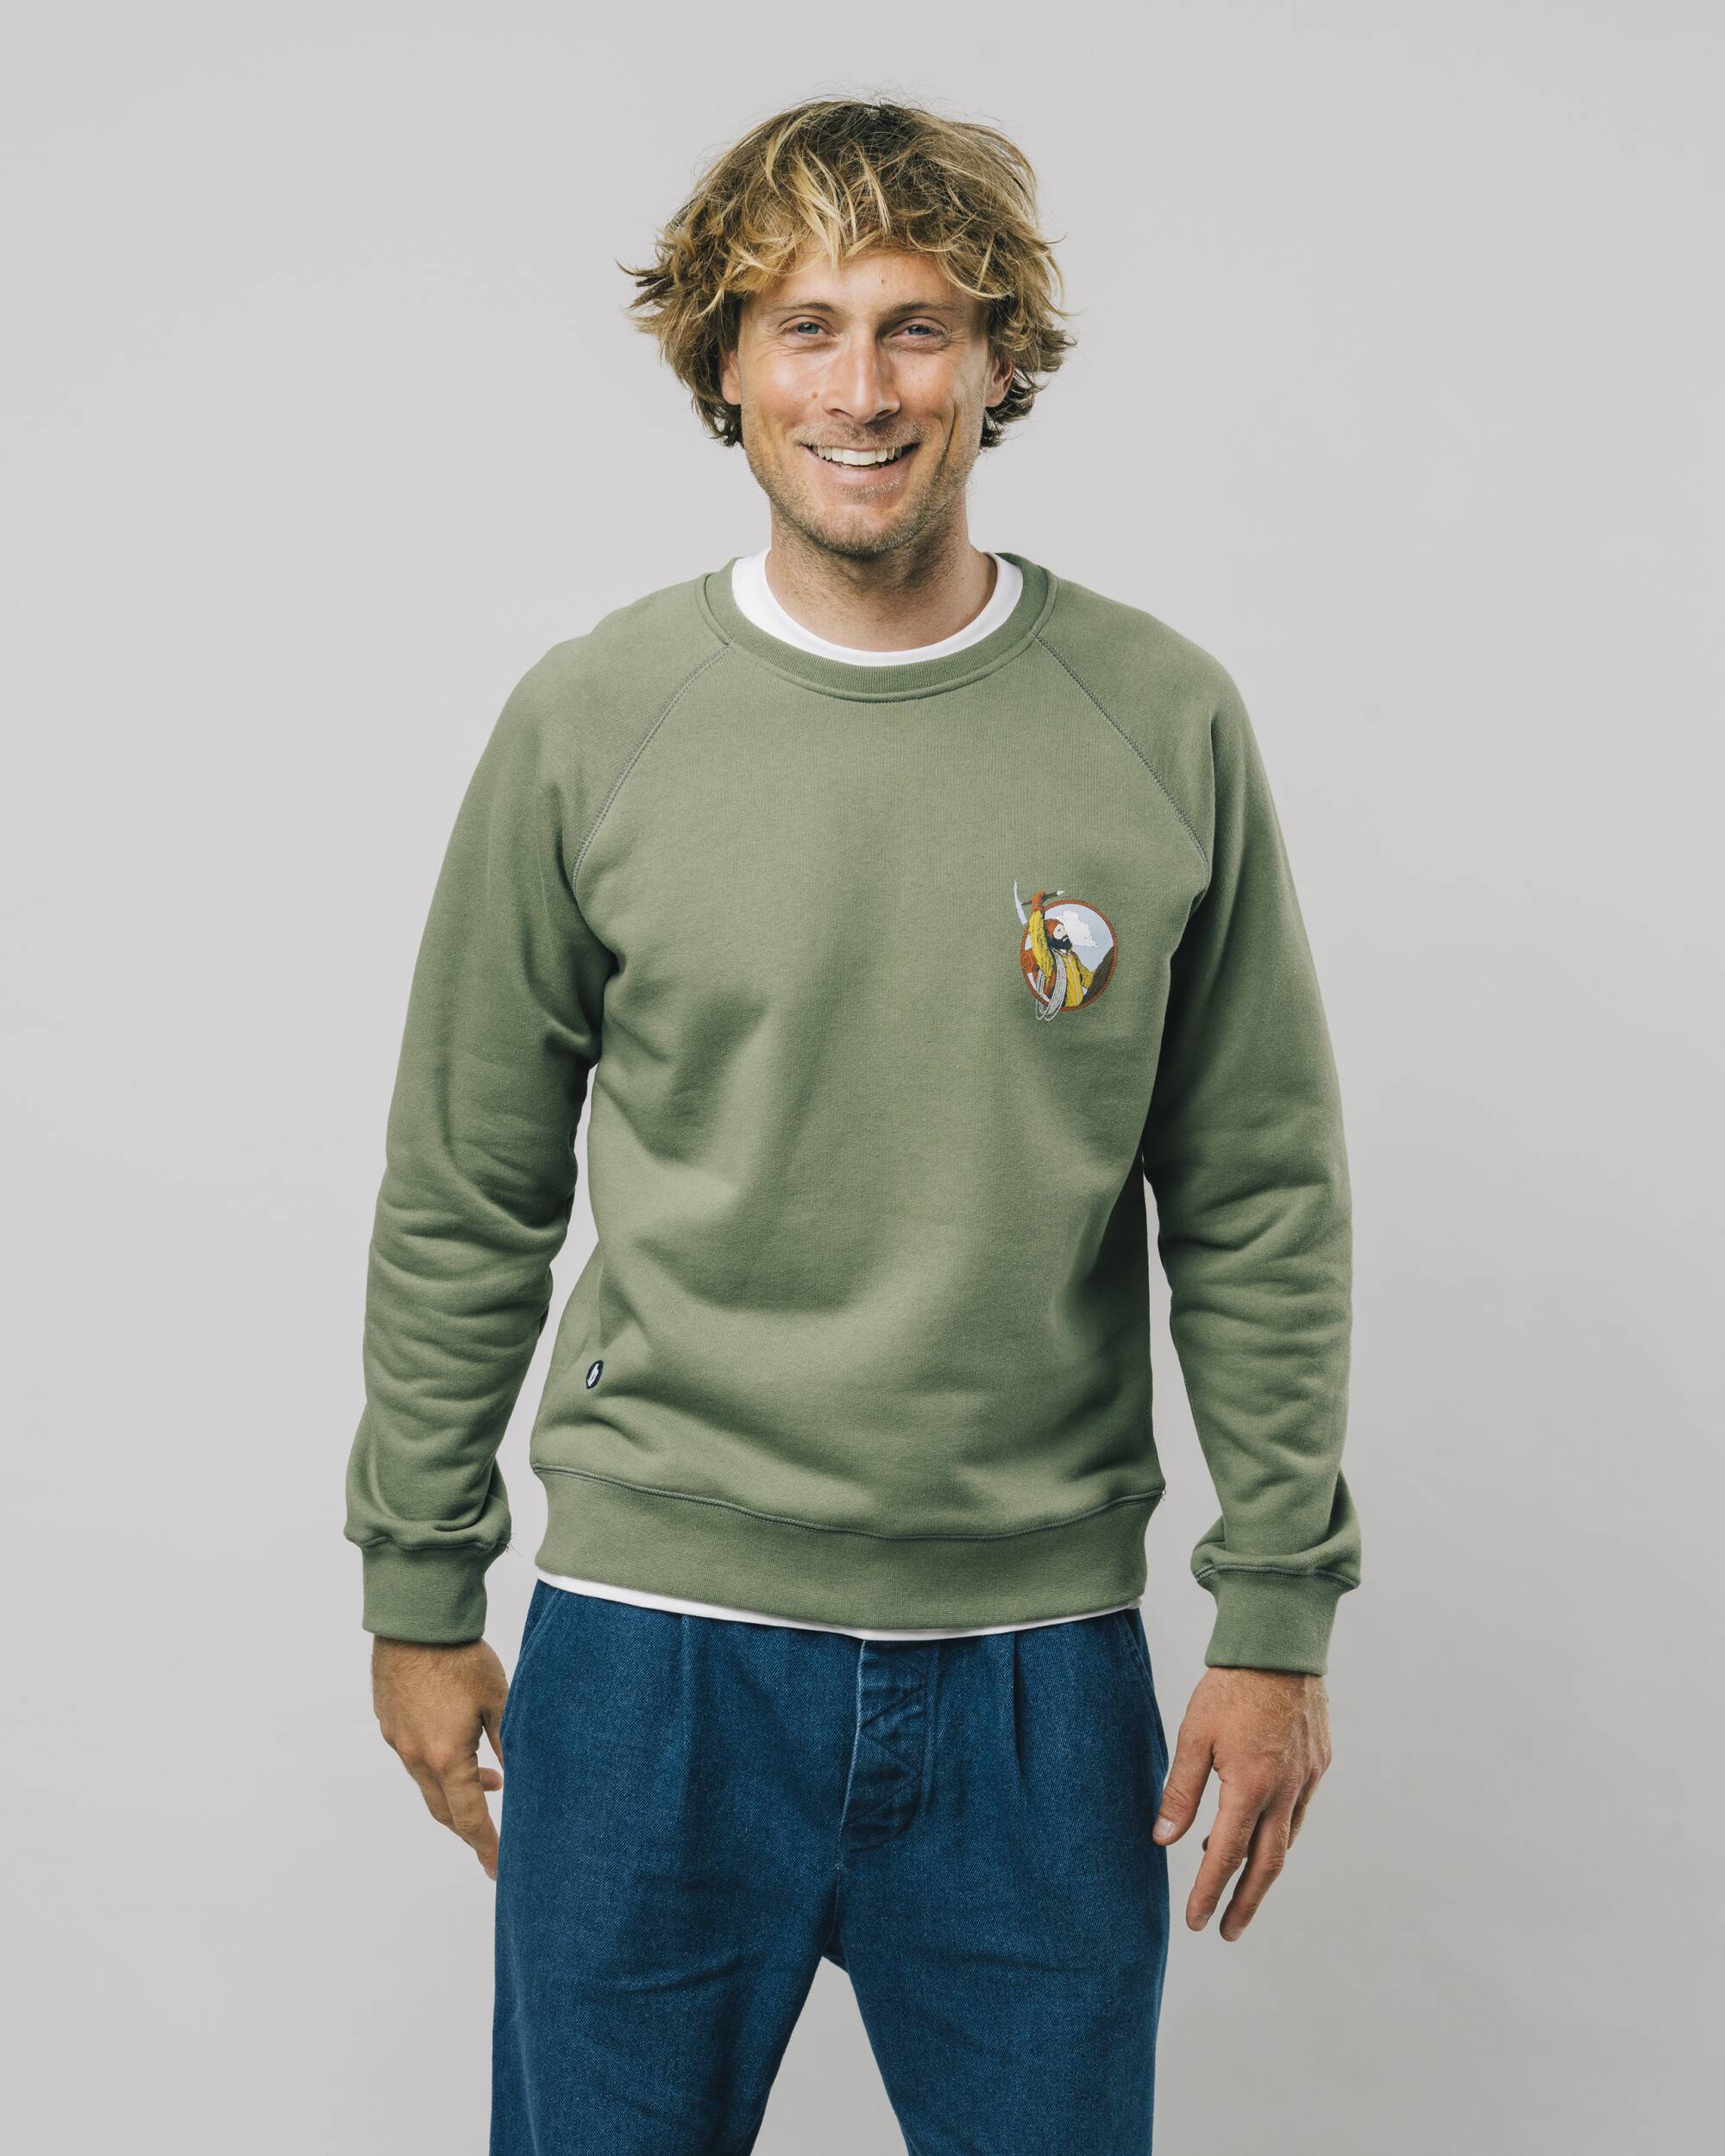 Sweat-shirt "The Hiker" en vert / olive en coton 100% biologique de Brava Fabrics